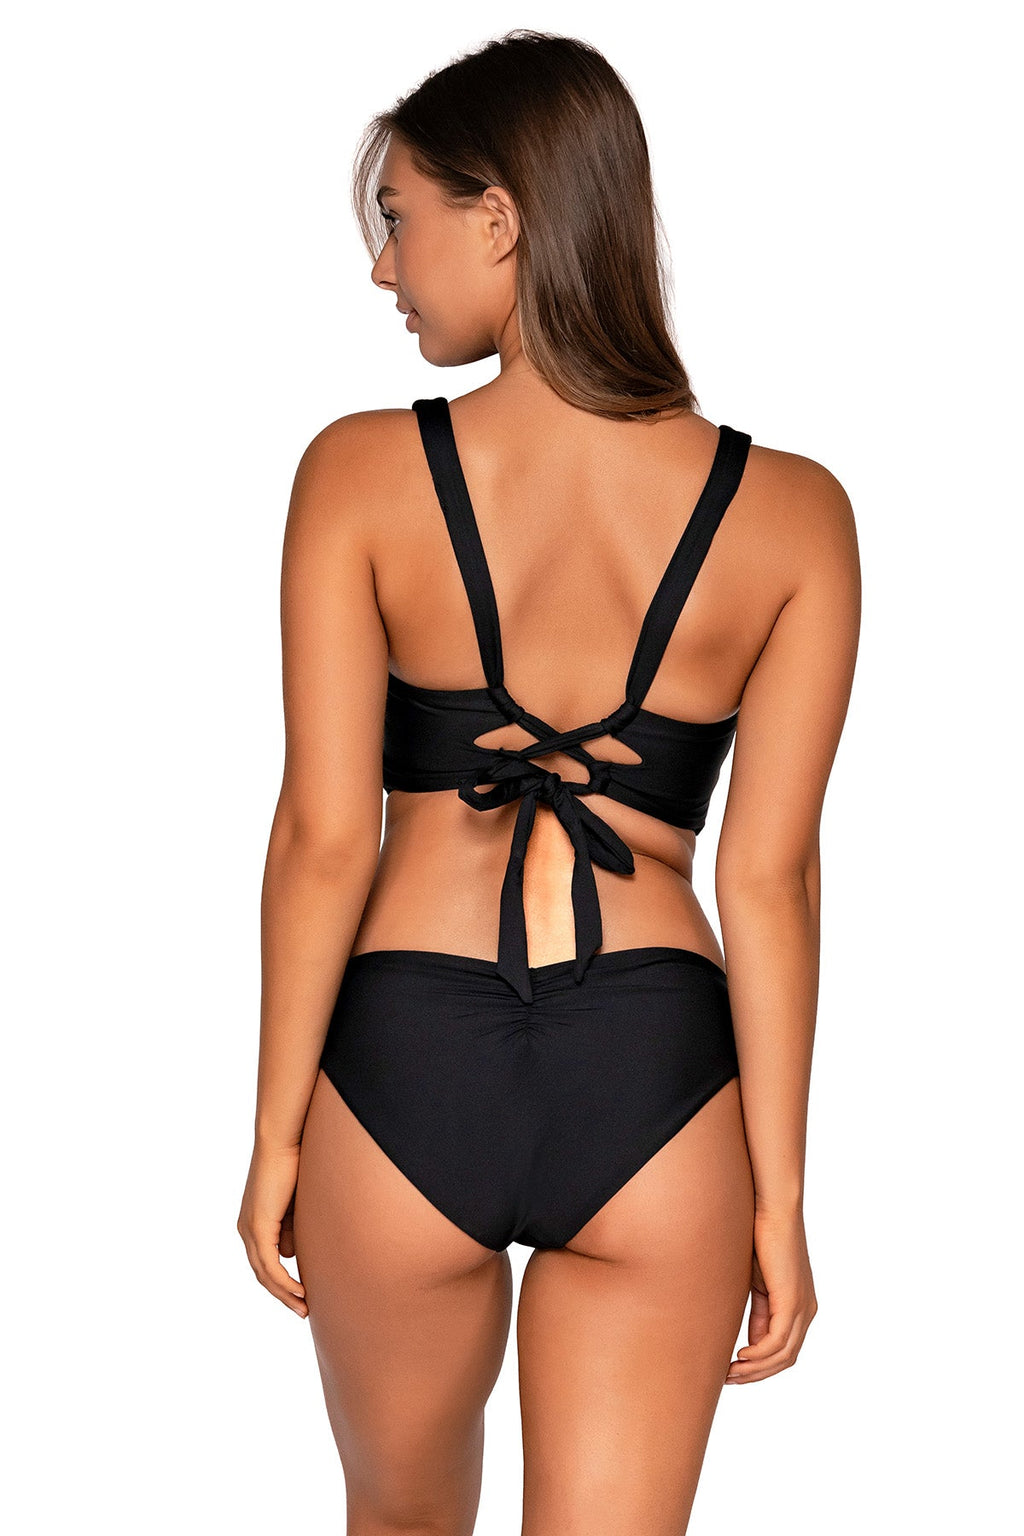 Bralette Swim Tops - Bikini & Bathing Suit Tops for Women